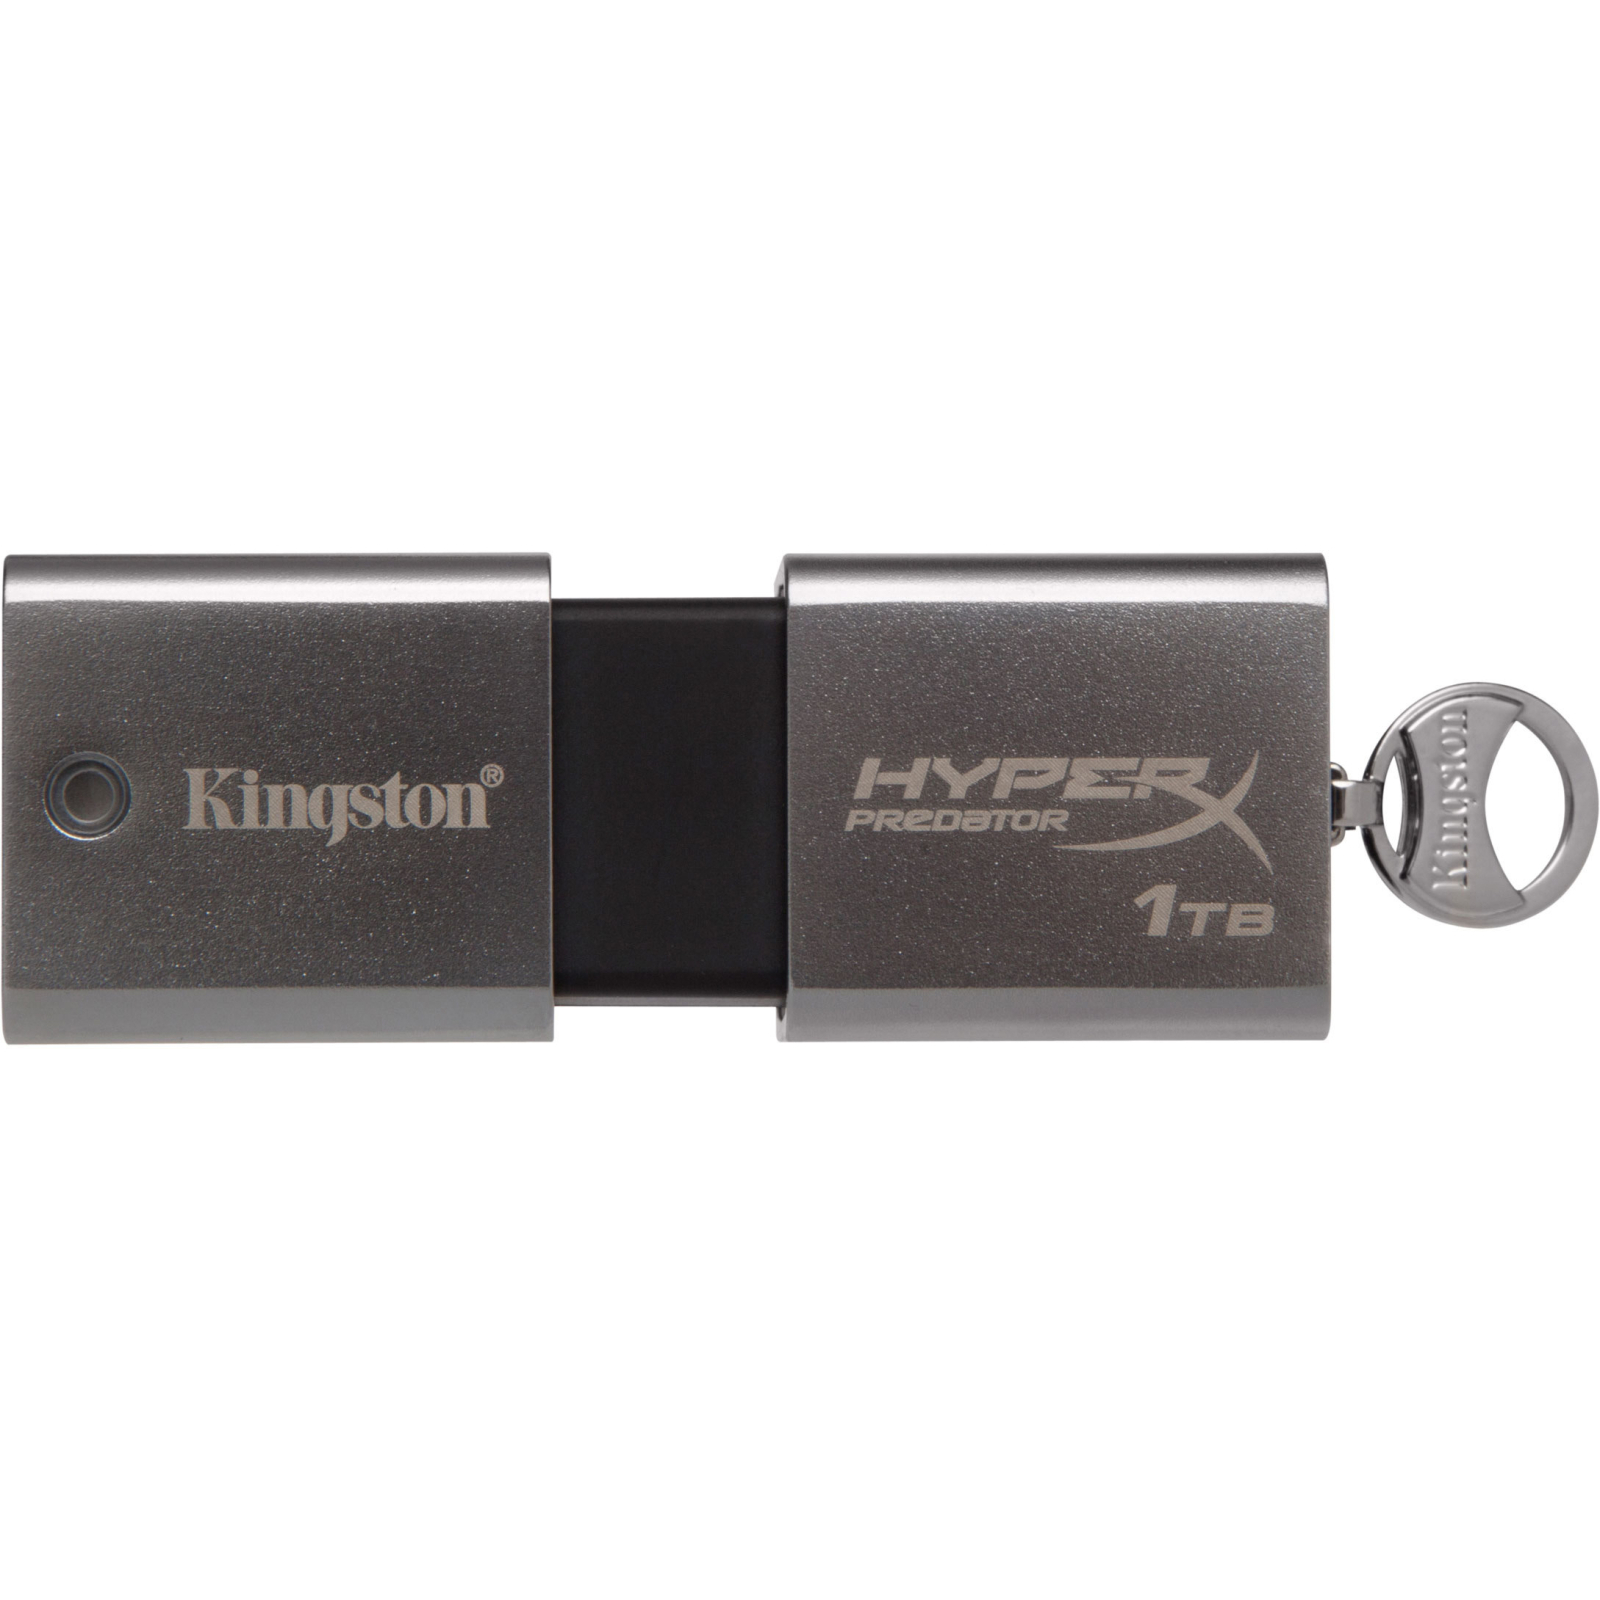 USB флеш накопитель Kingston 1TB DataTraveler HyperX Predator Metal Silver USB 3.0 (DTHXP30/1TB)